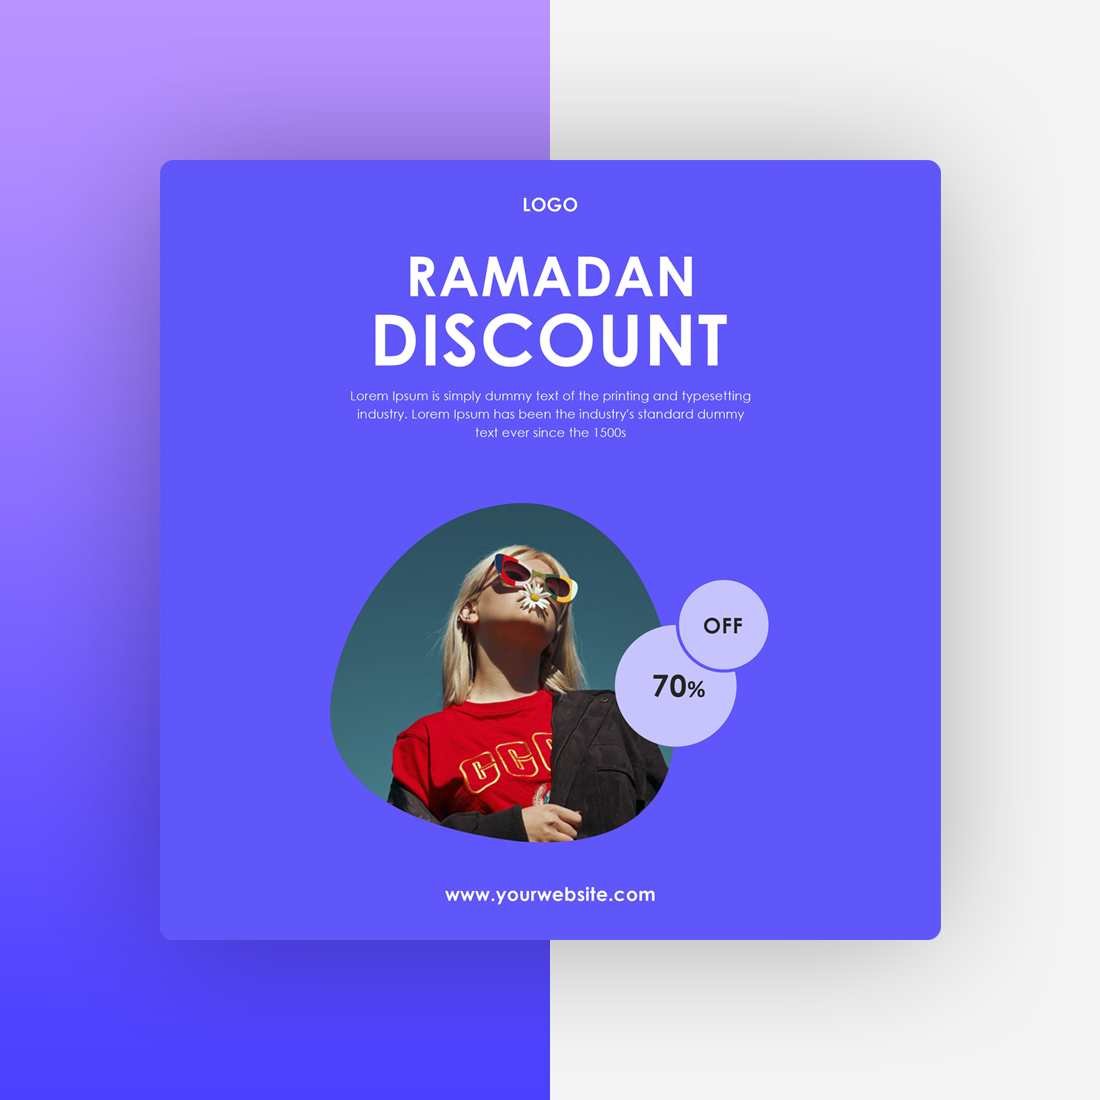 Ramadan Discount Poster Design cover image.